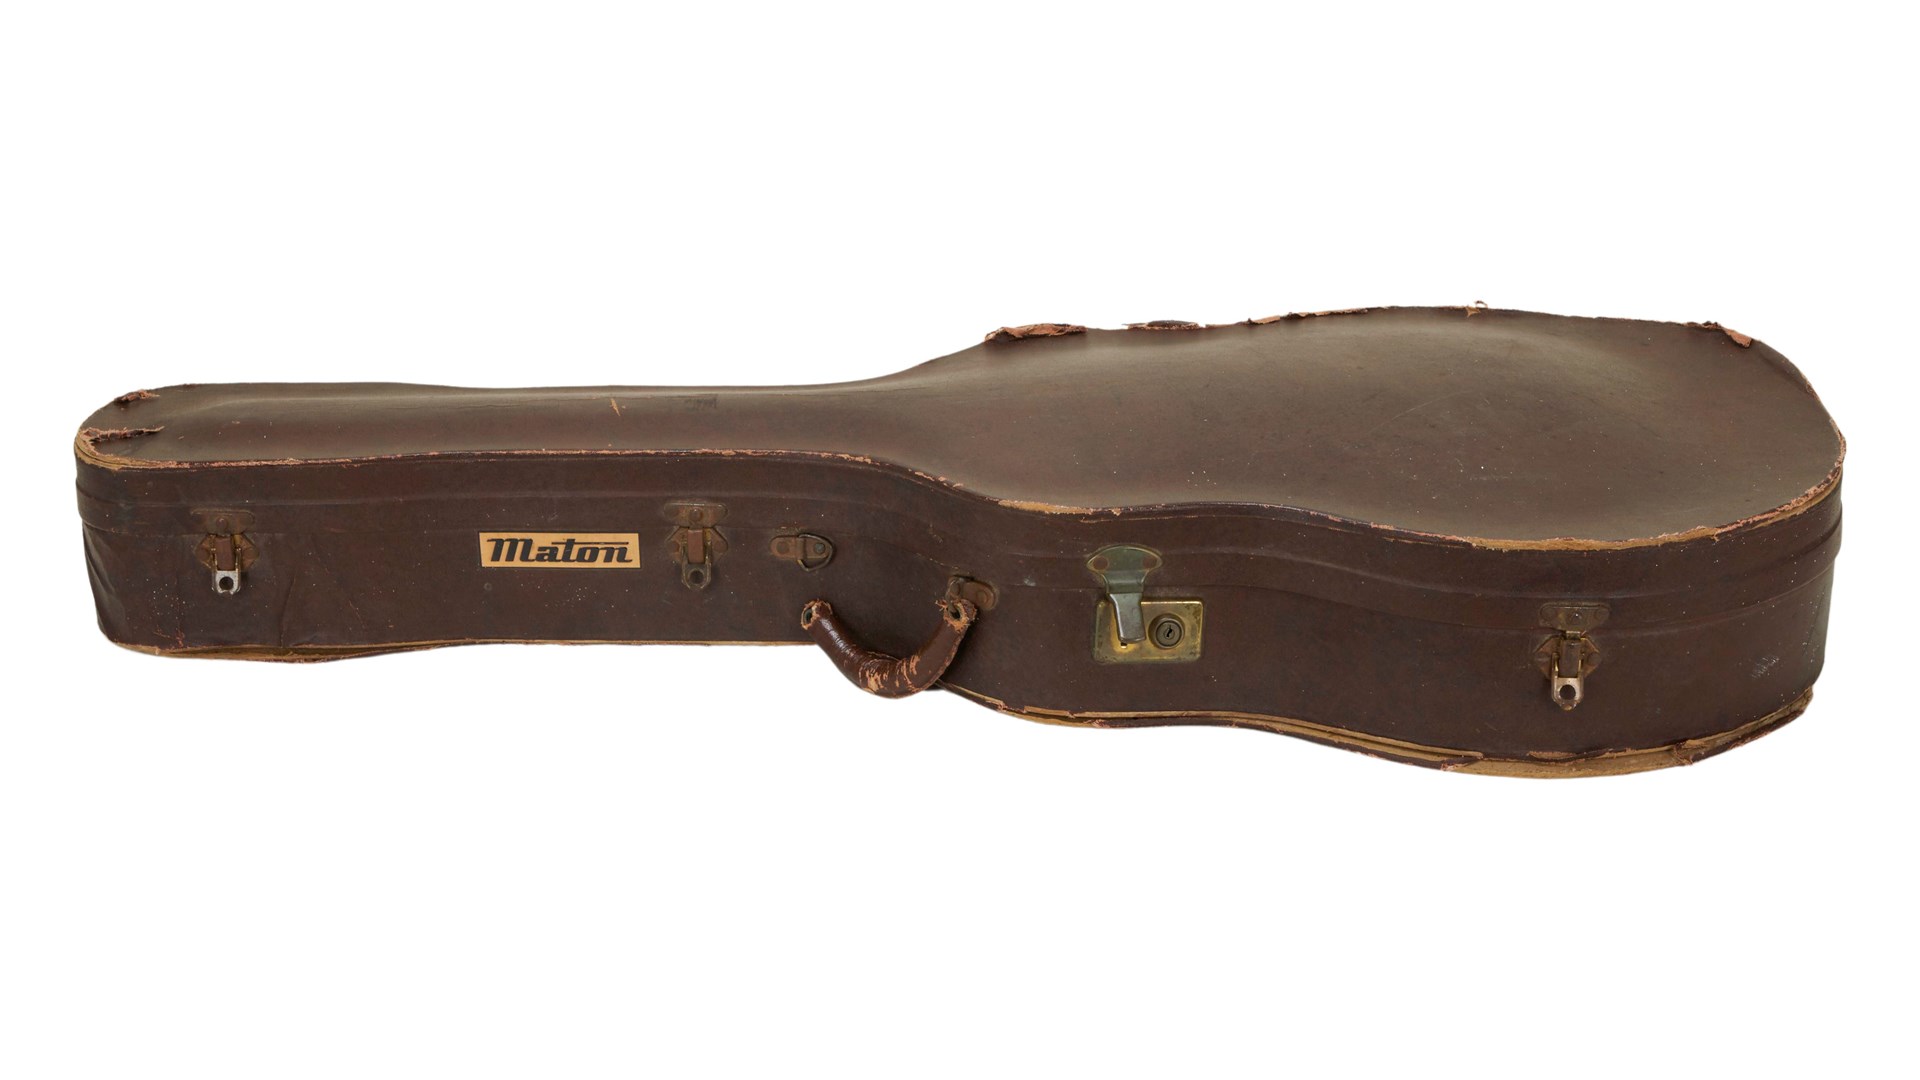 The guitar’s Maton Australian-made case (Julien’s Auctions/PA)